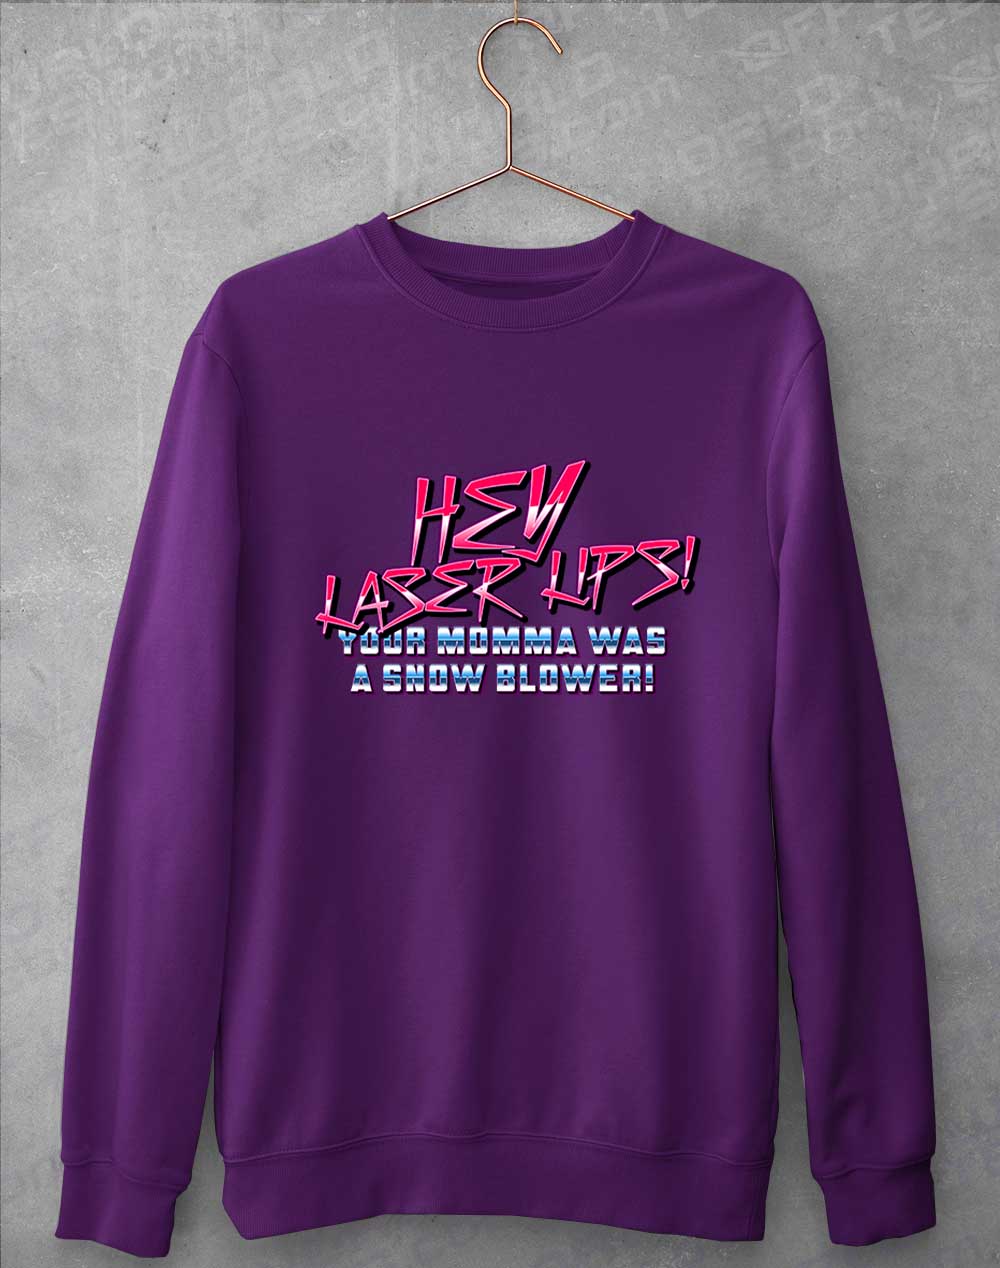 Purple - Hey Laser Lips Sweatshirt